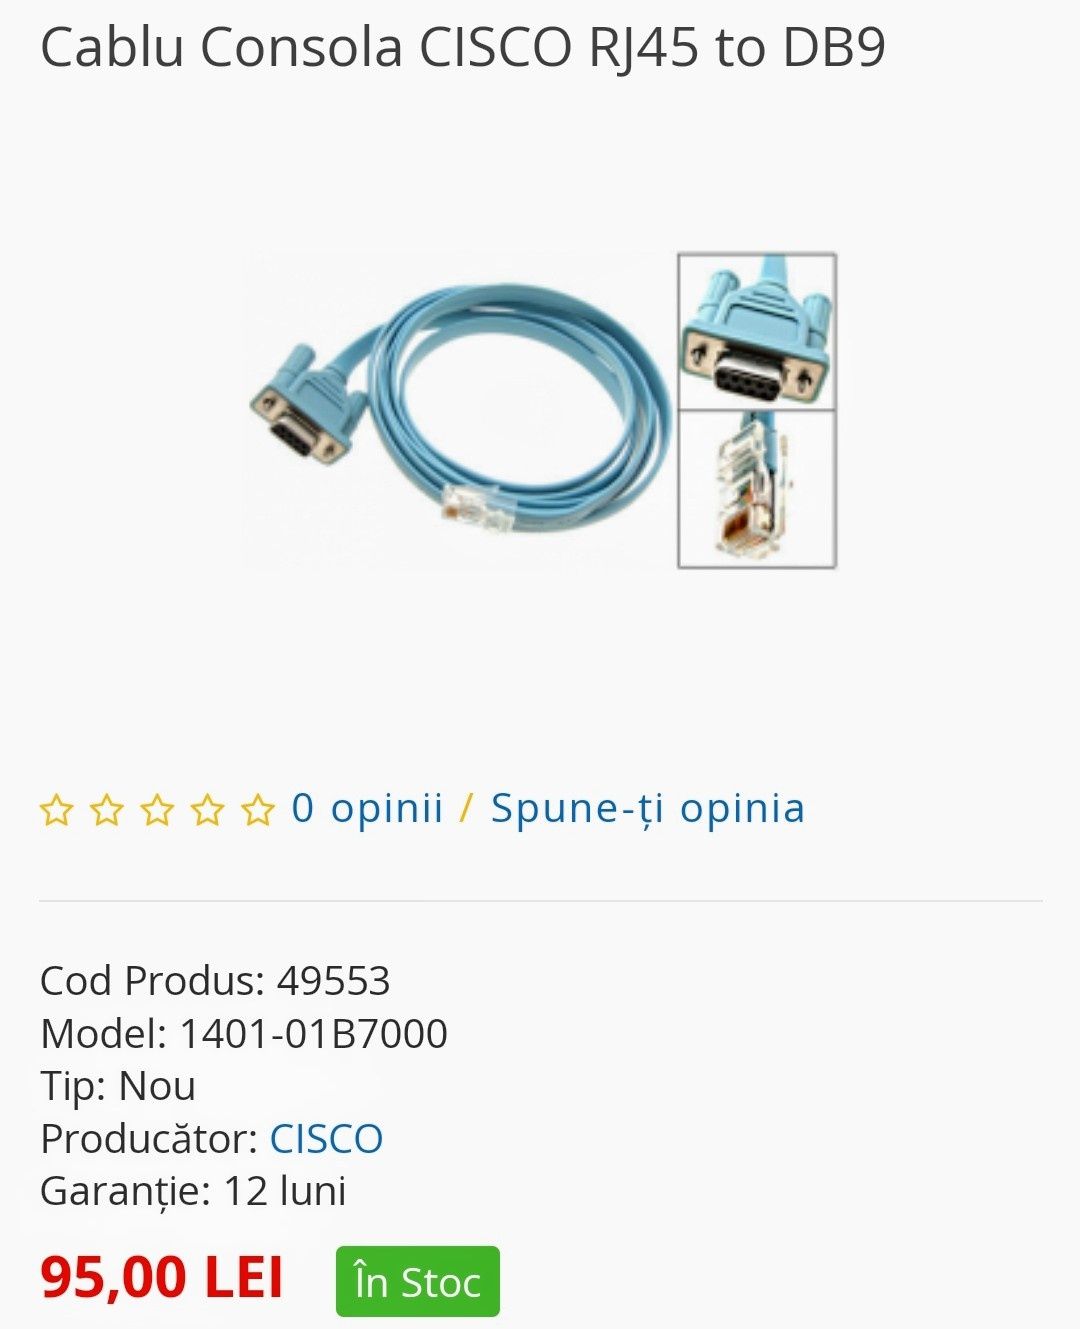 Cablu consolă CISCO RJ45 la DB9